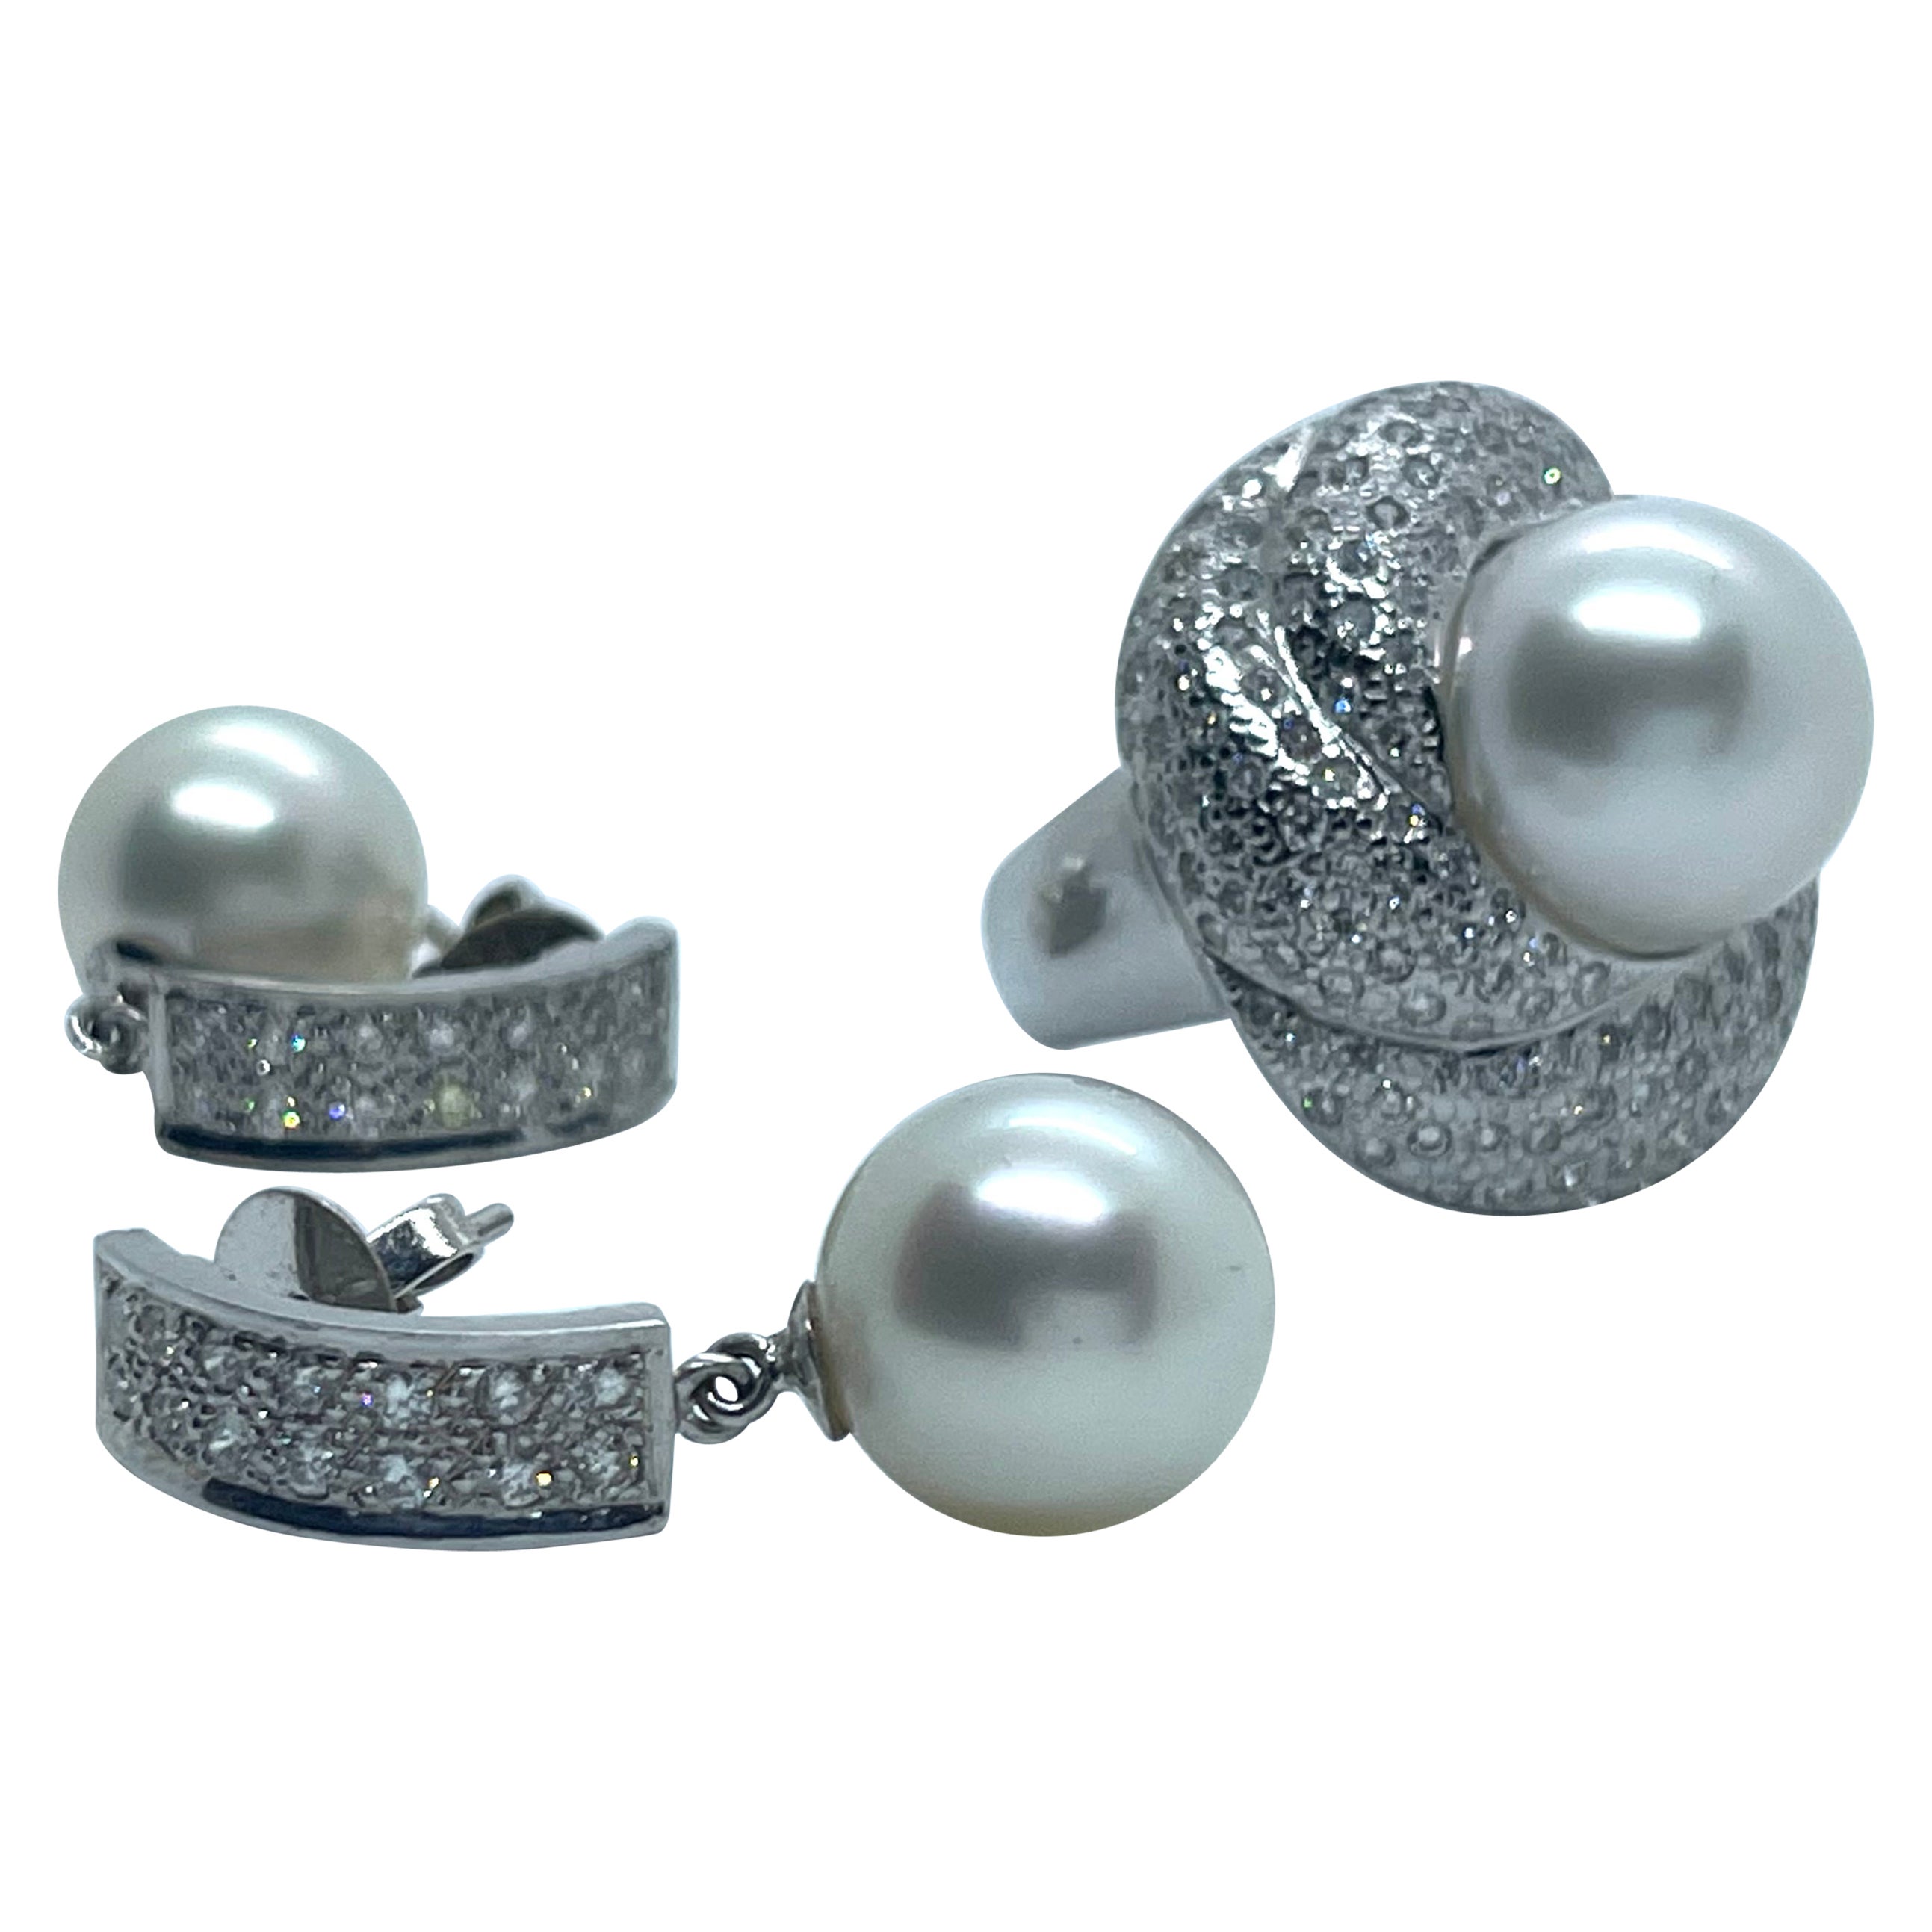 Pearl Diamond 18 Karat White Gold Set Earrings and Ring